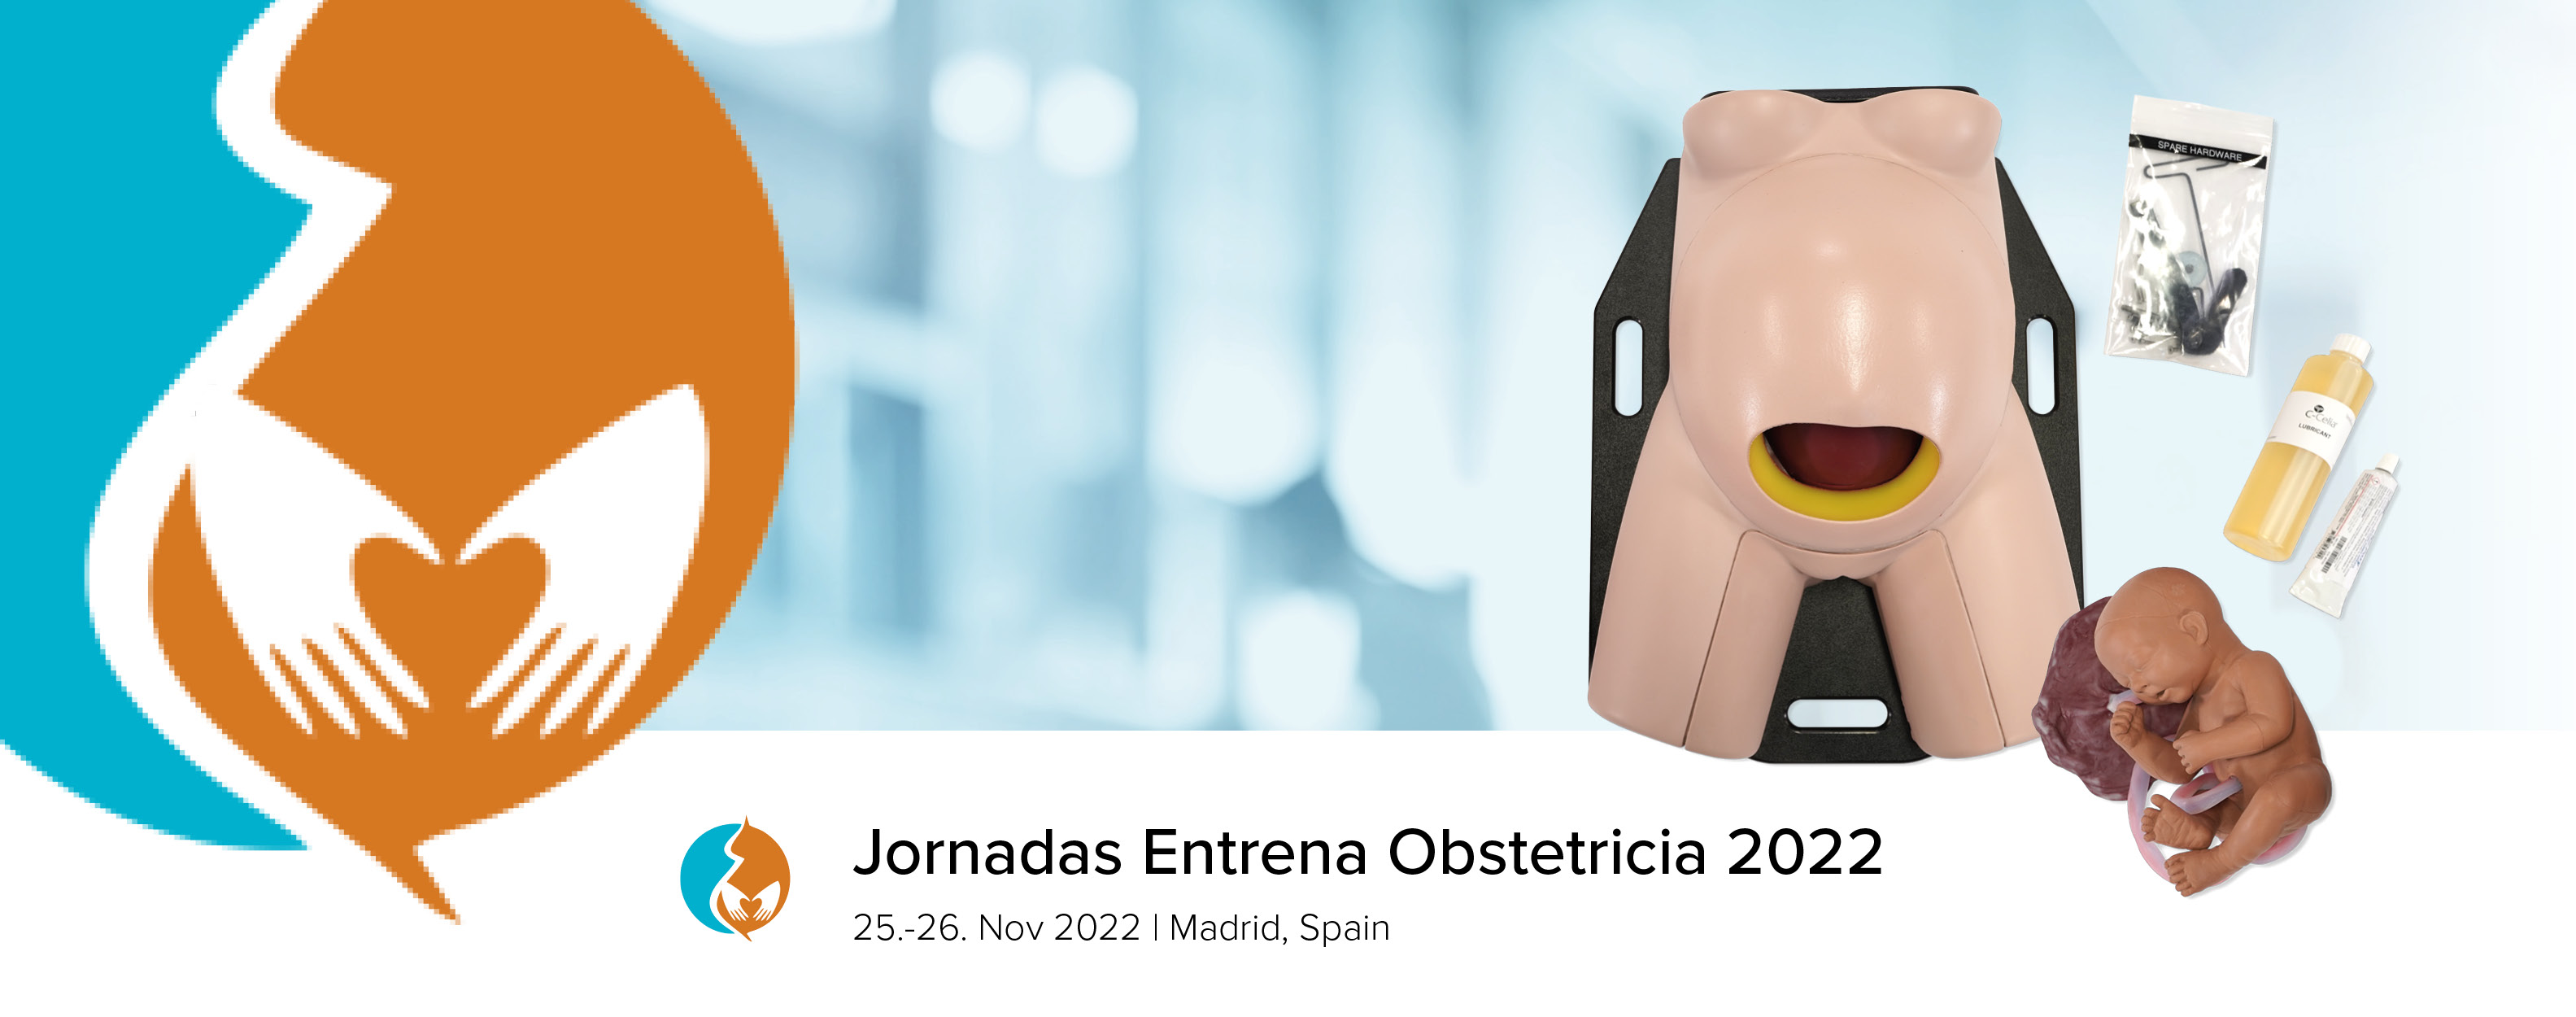 Obstetric Emergency Simulators at JORNADAS ENTRENA OBSTETRICIA 2022